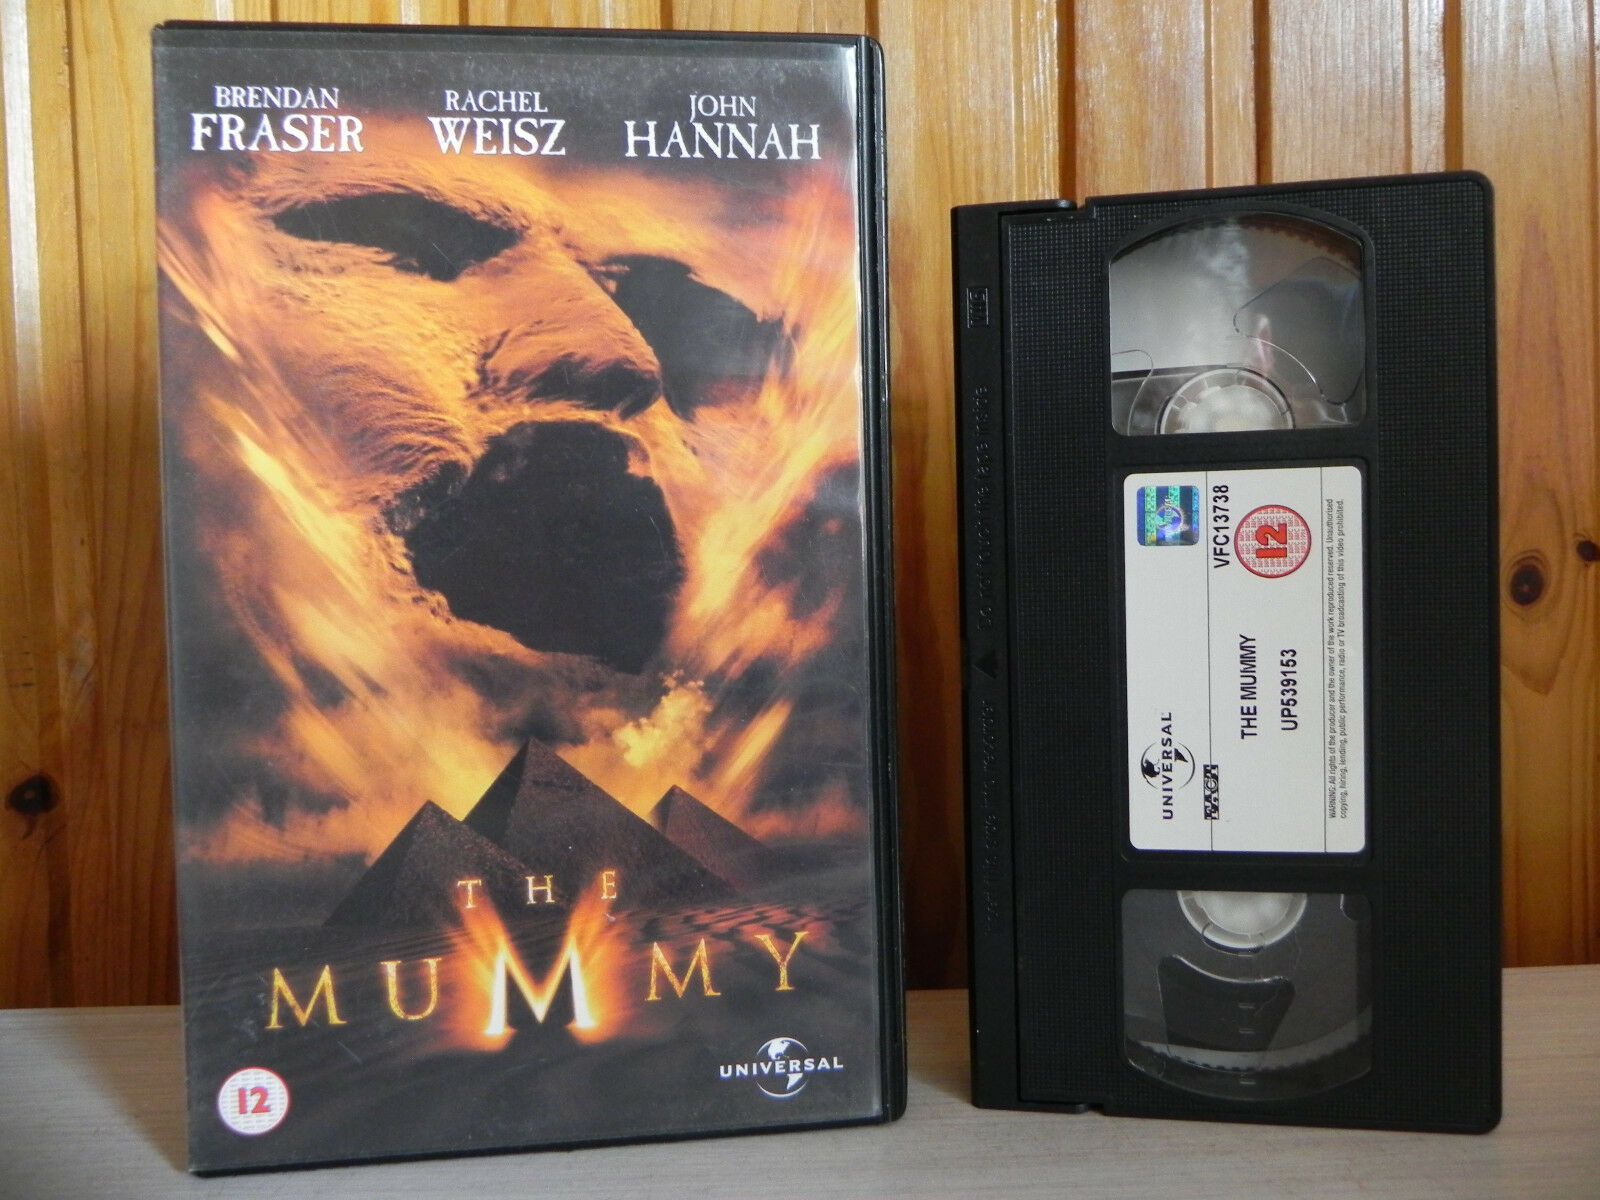 The Mummy (1999): Action Adventure [Large Box] Rental - Brendan Fraser - Pal VHS-